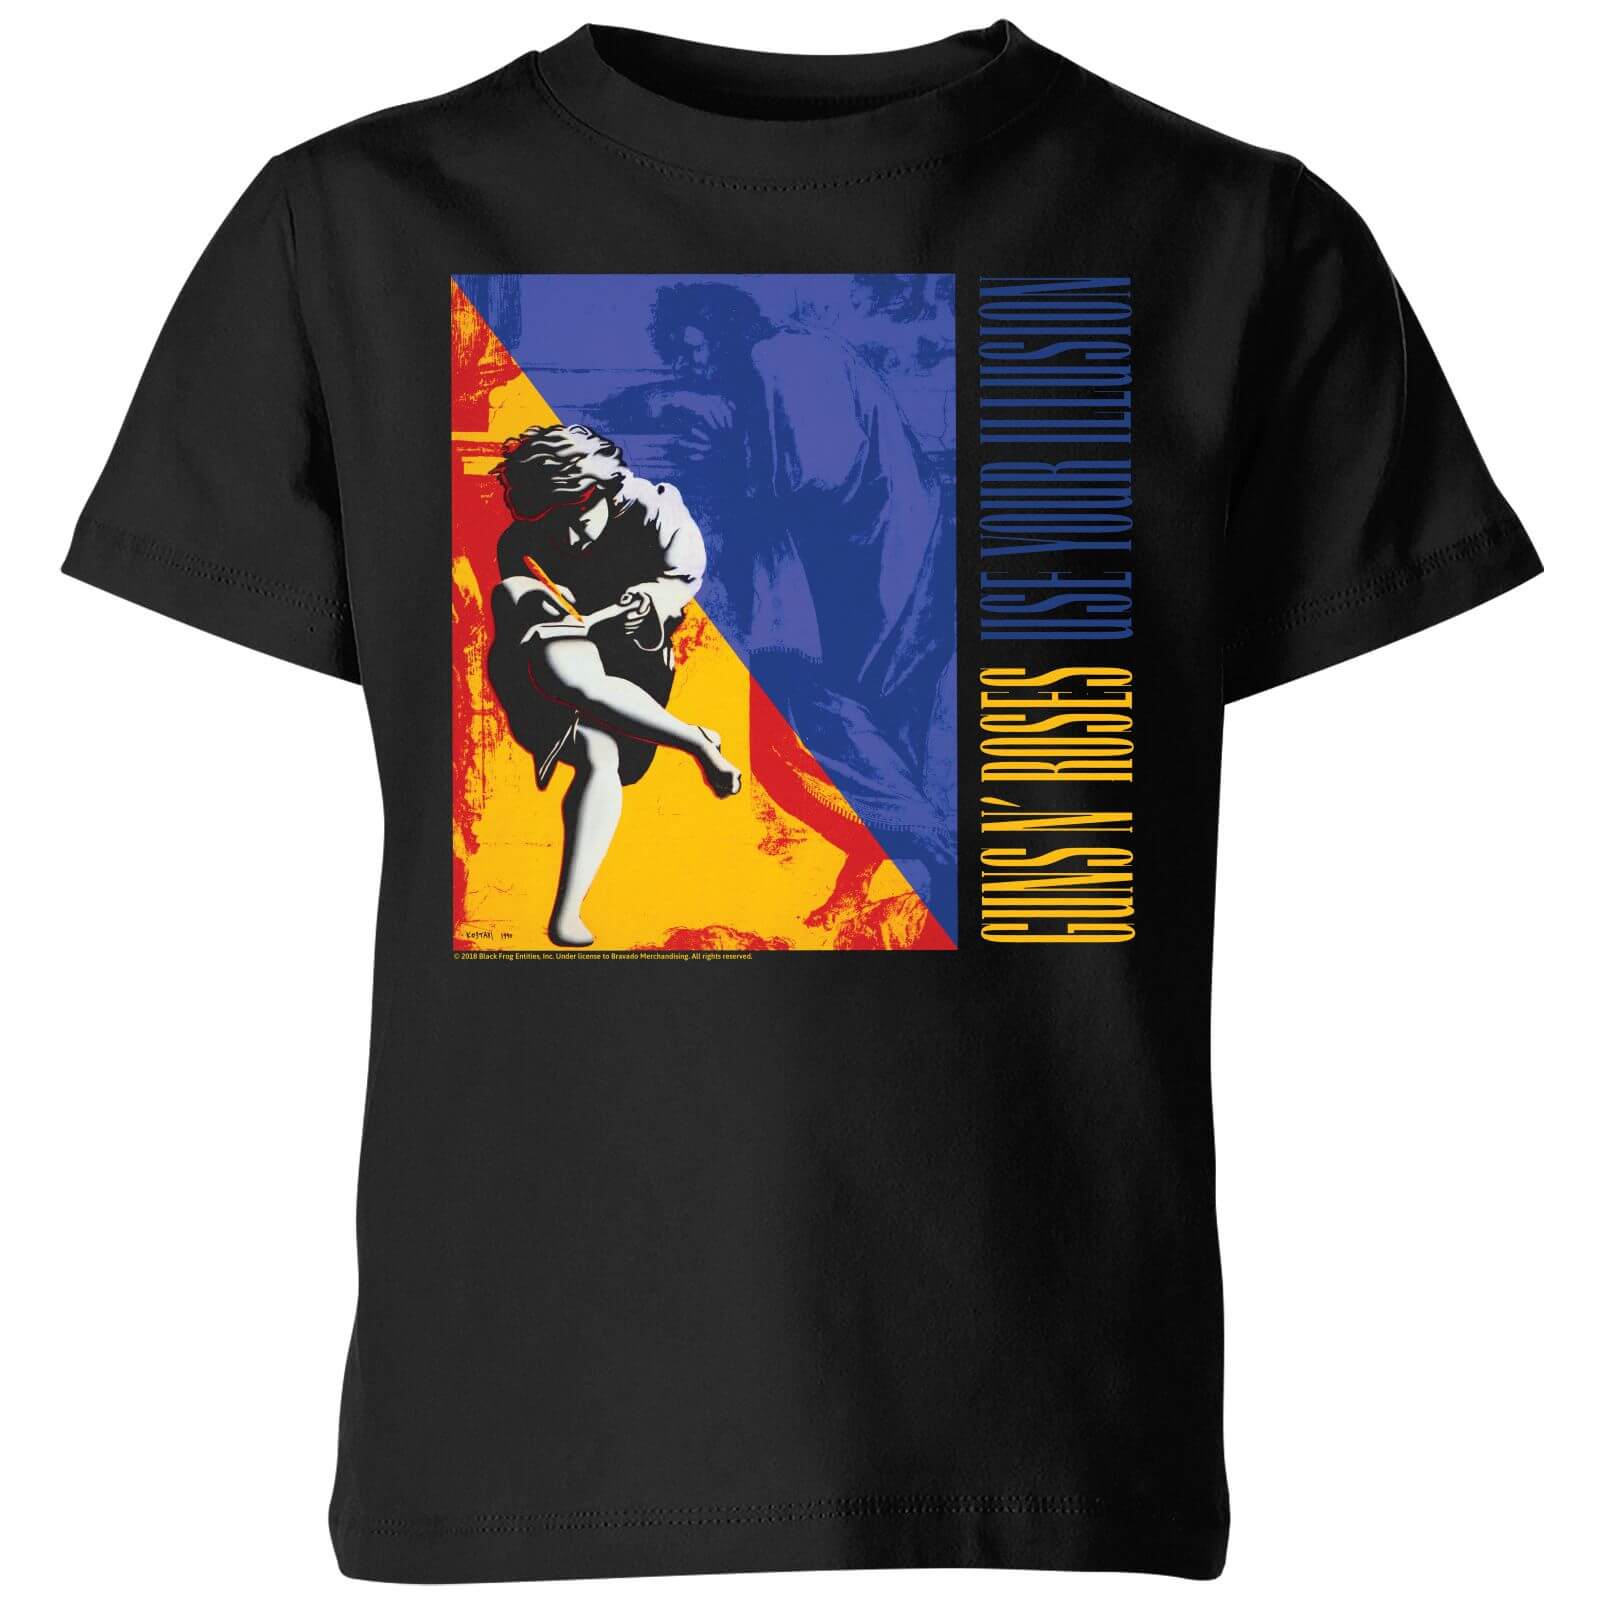 Guns N Roses Use Your Illusion Kids' T-Shirt - Black - 7-8 Years - Black